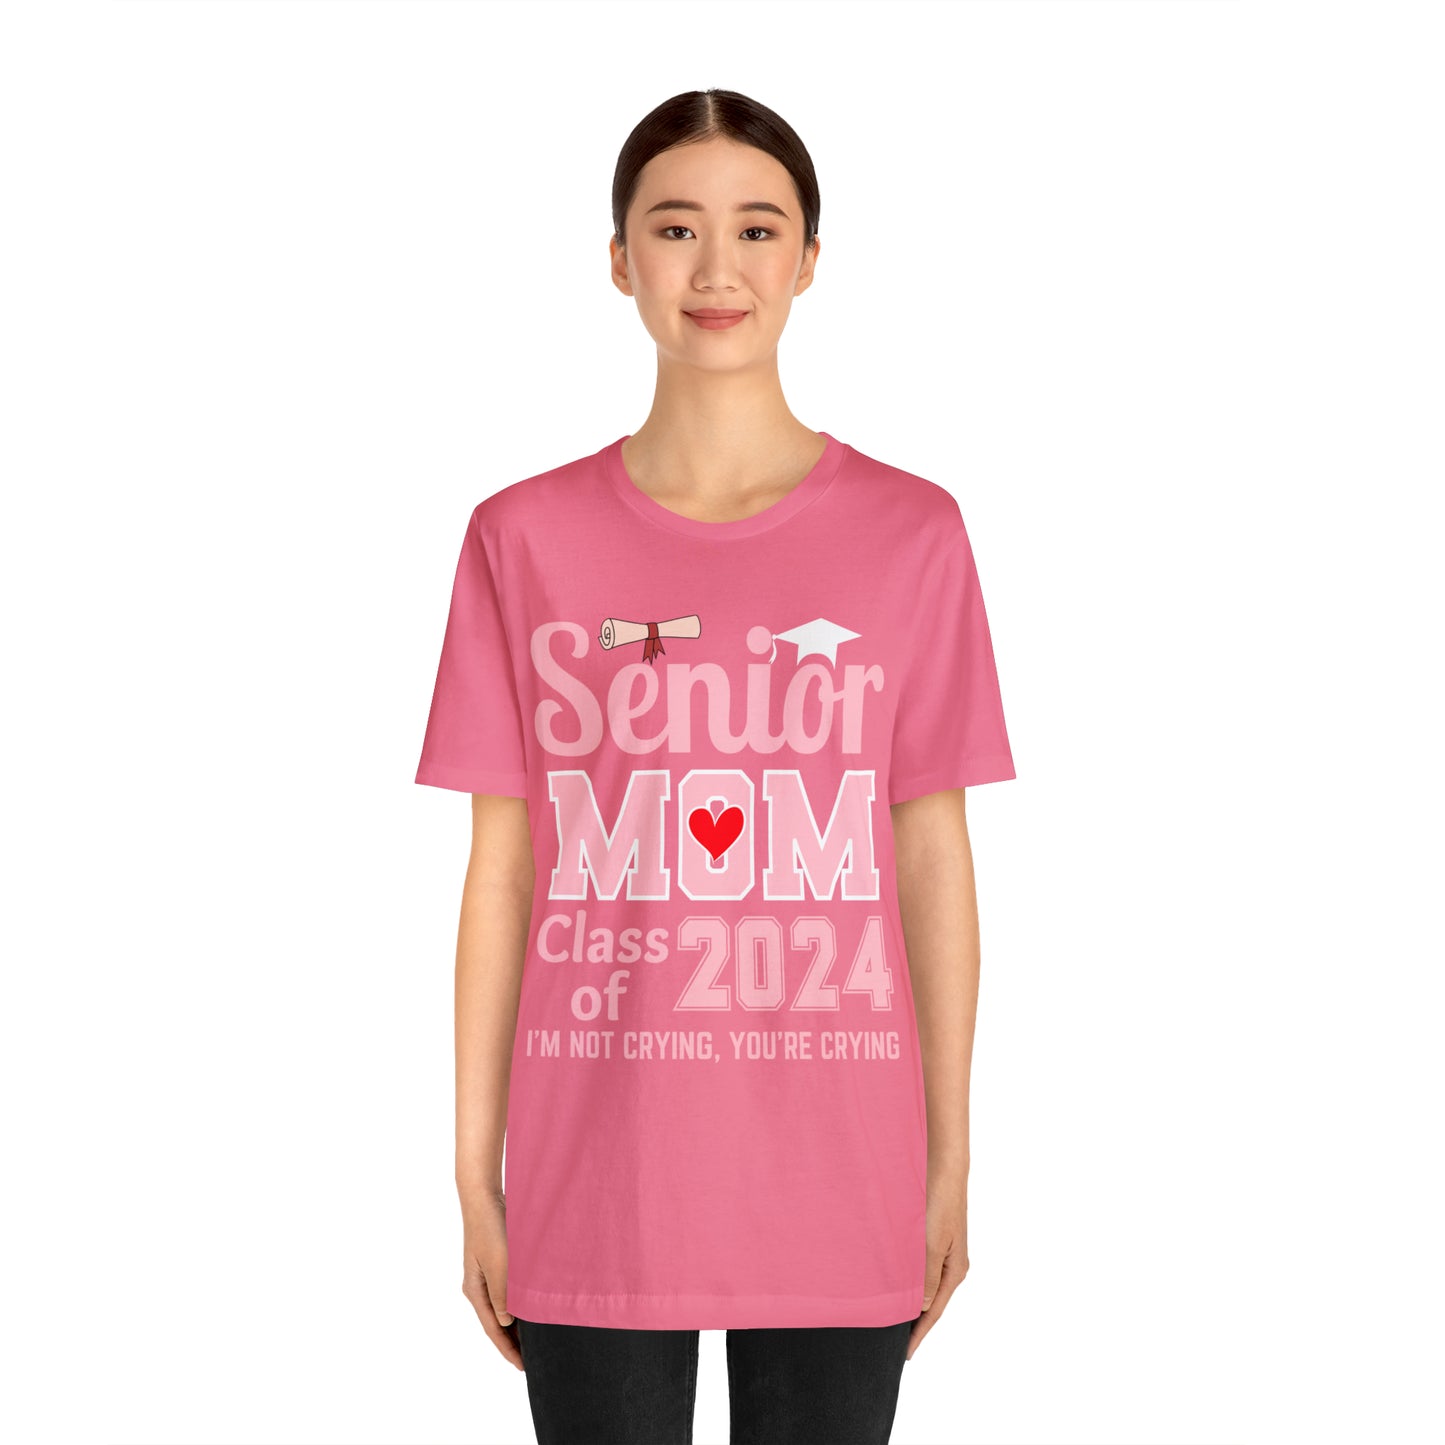 Senior Mom Class of 2024 T-Shirt Pink, Proud Senior Mom Shirt, Gift for Graduate, Graduation 2024 Family Shirt 2024 Senior Mom